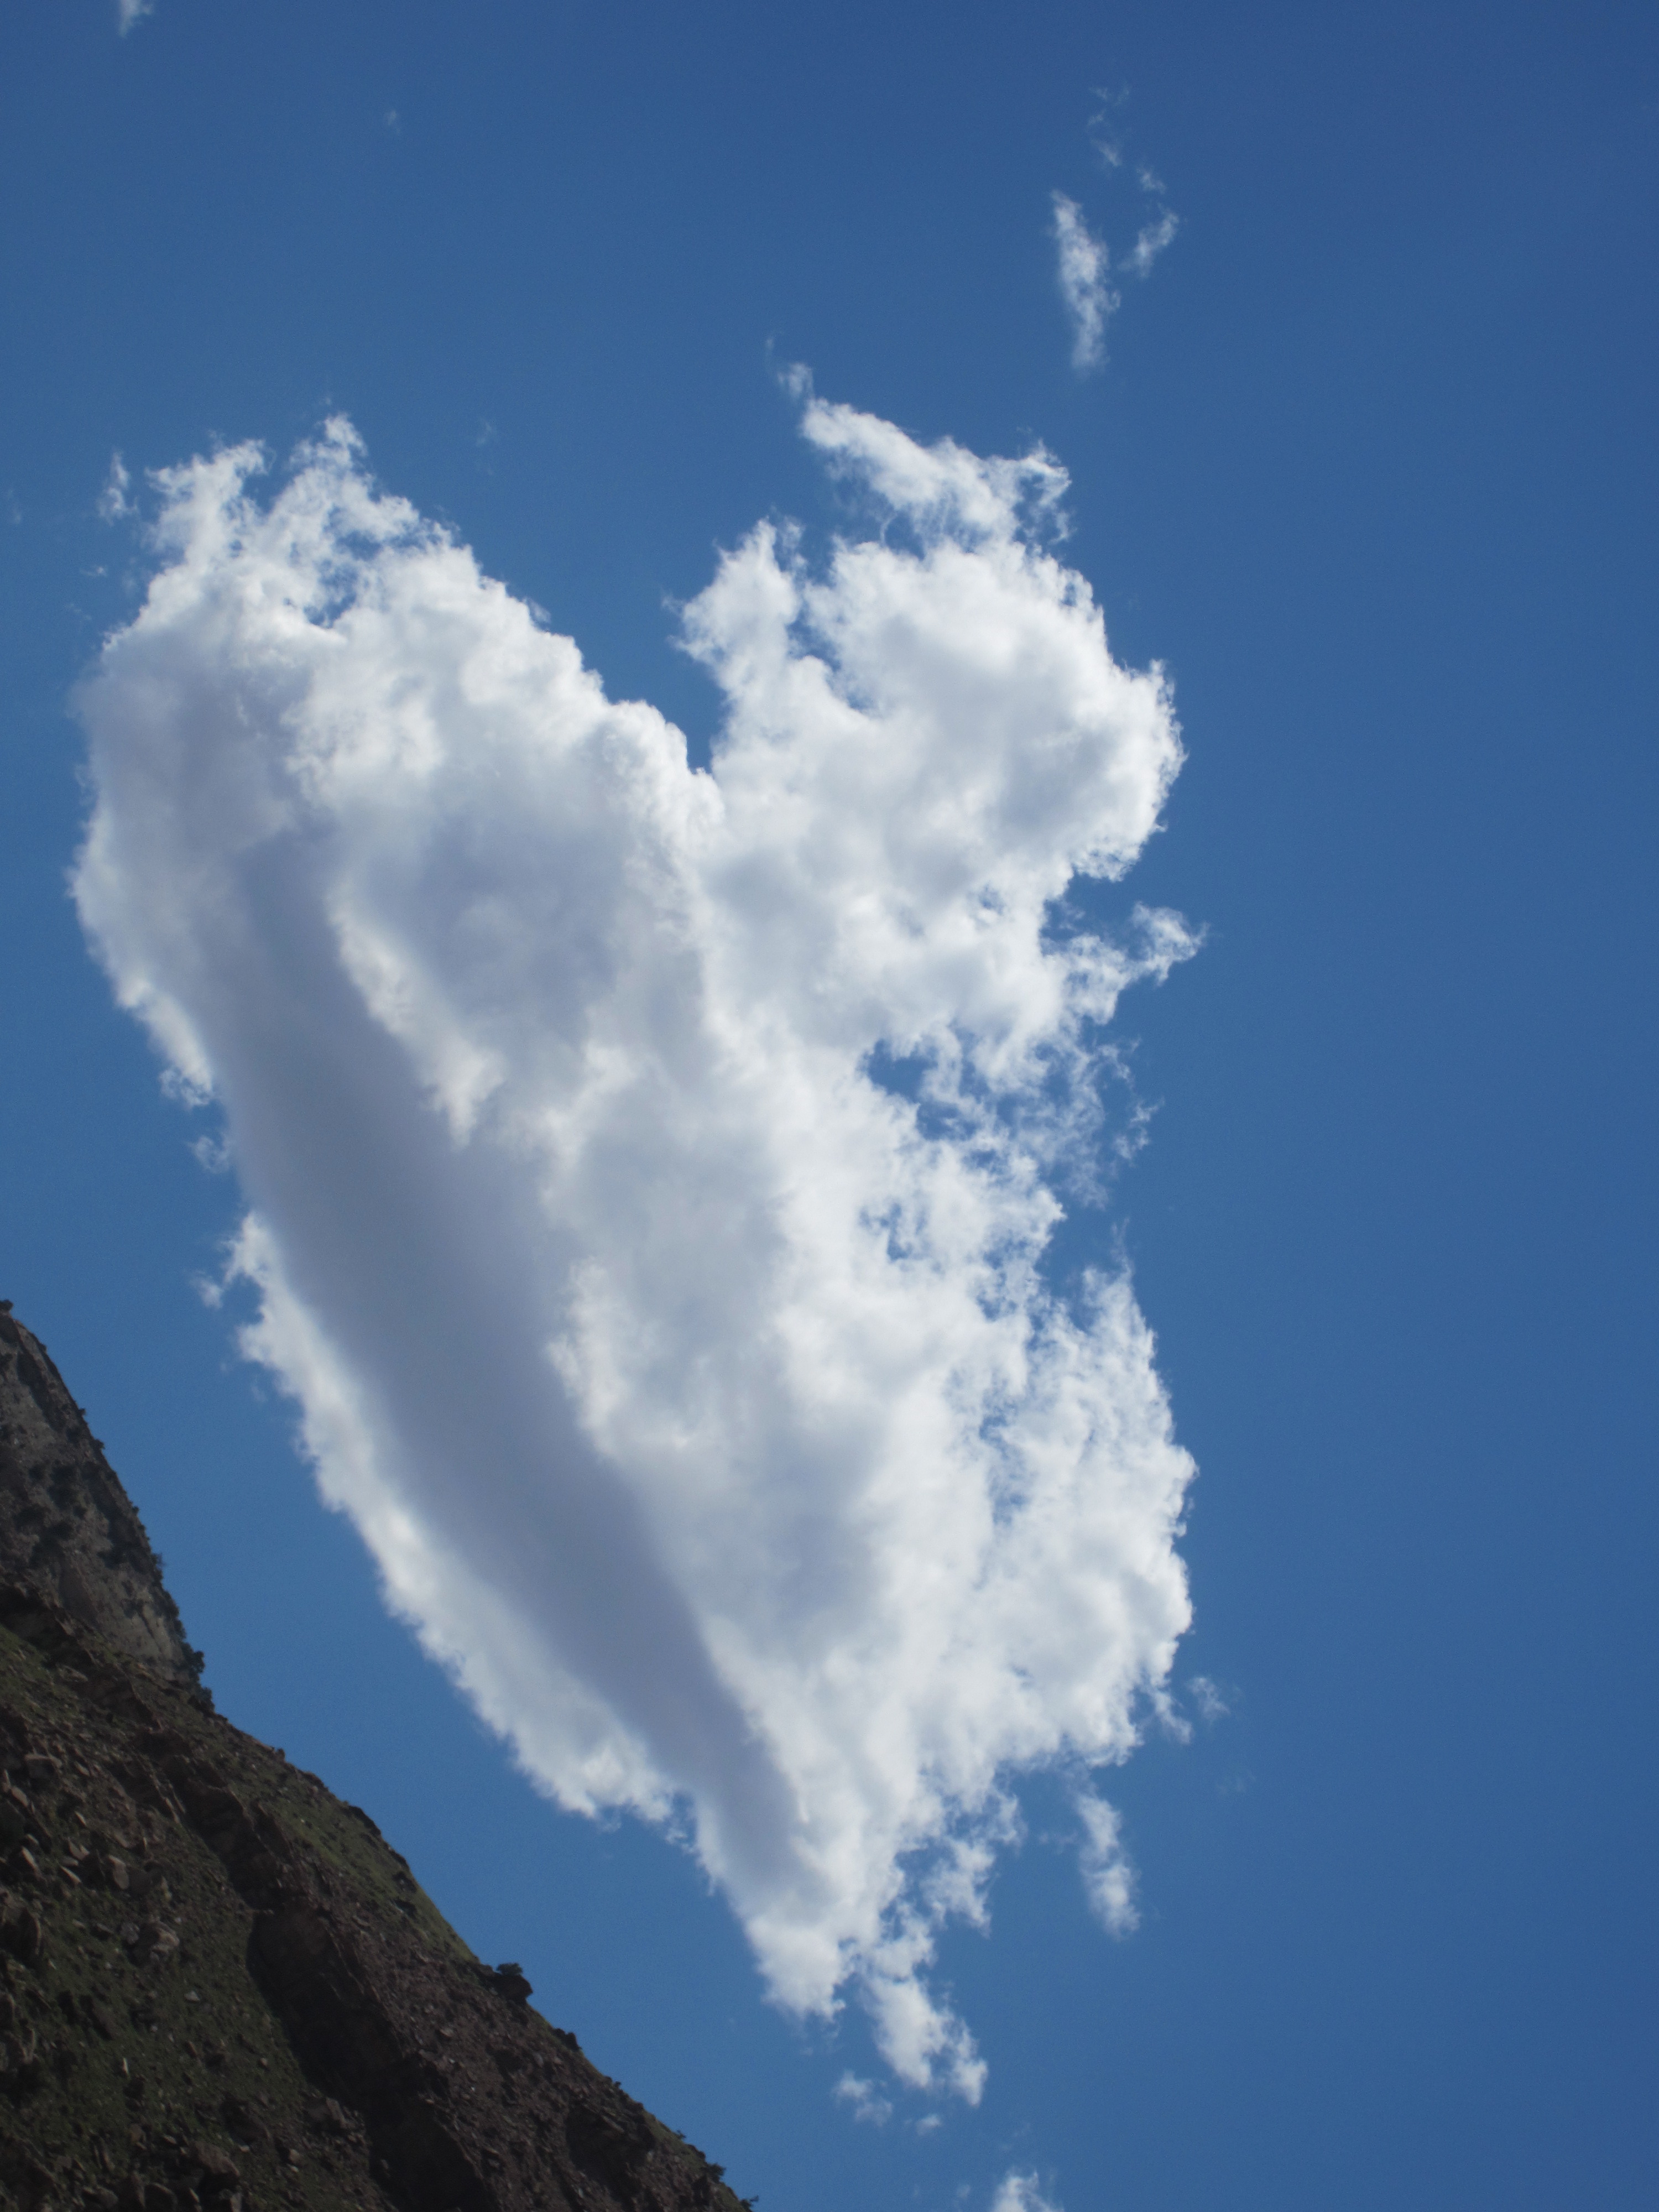 Cloud heart by Rosemerry